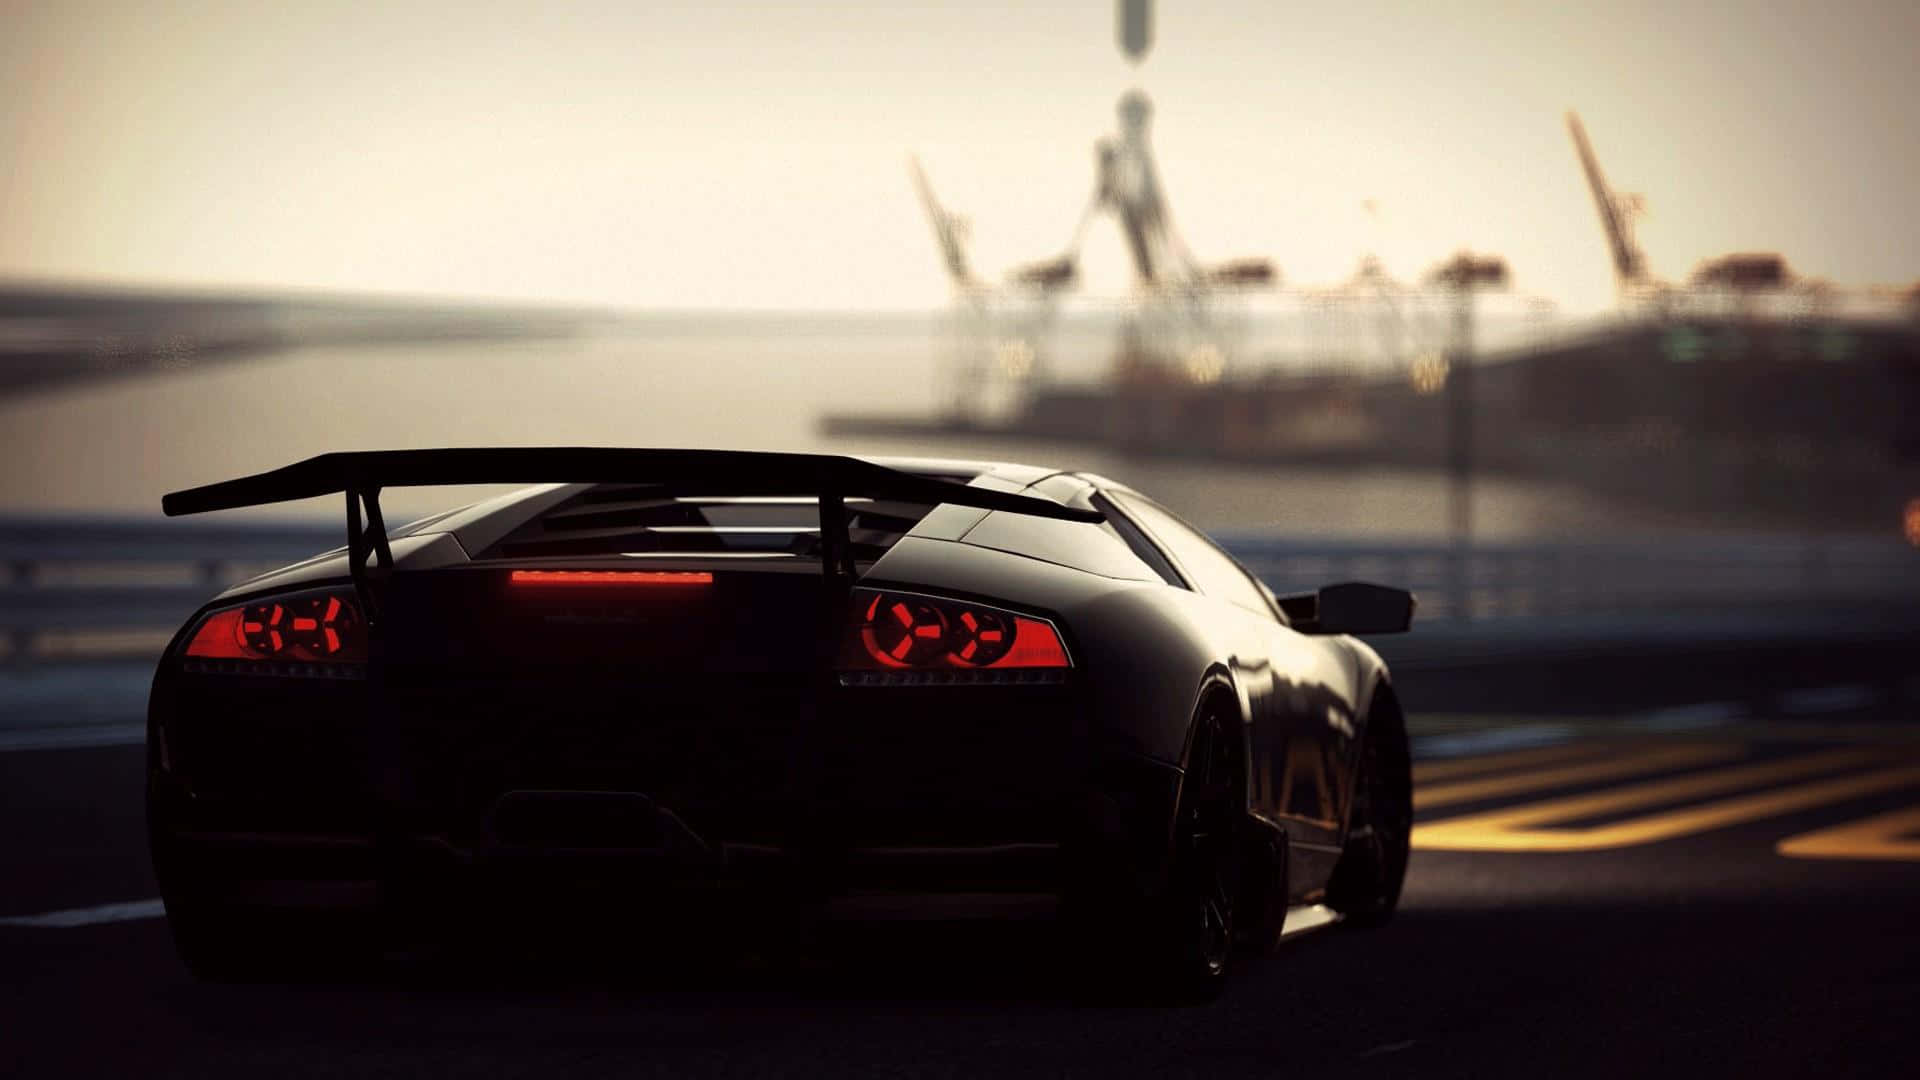 Sleek Black Lamborghini Murcielago Unleashing Power on a Desert Highway Wallpaper